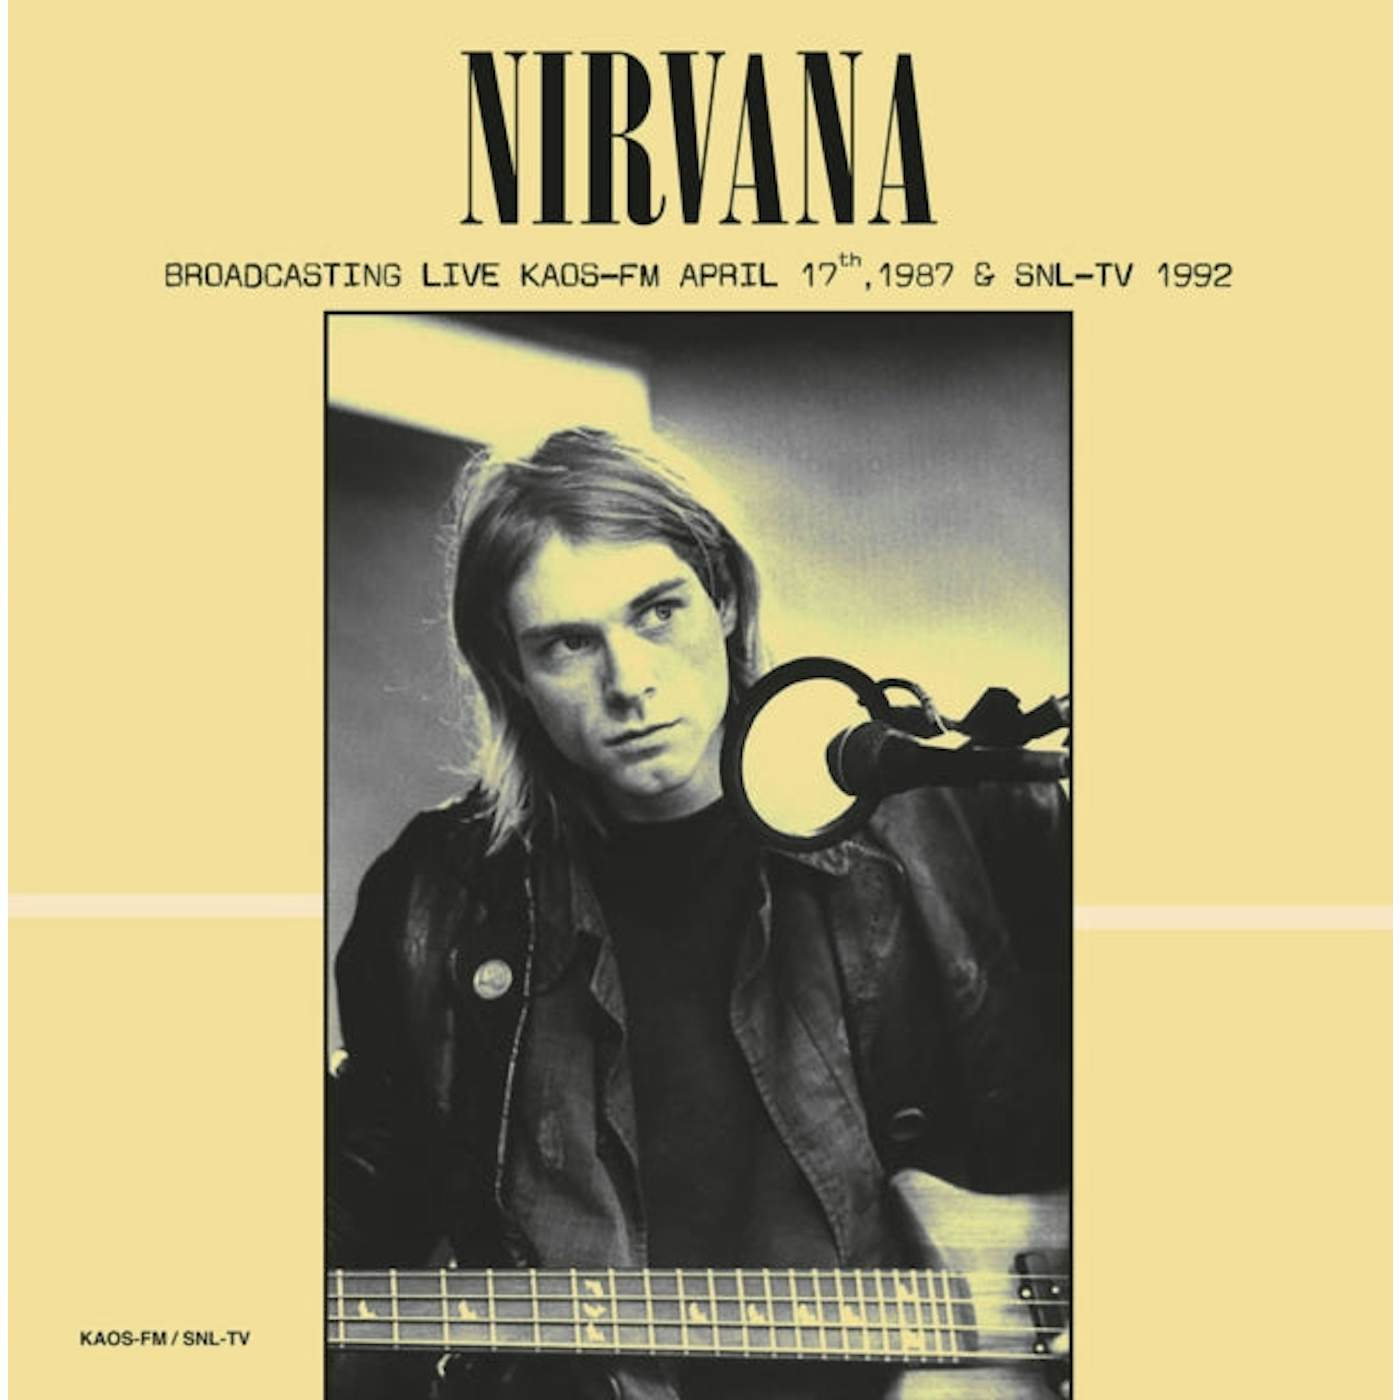 Nirvana LP Vinyl Record - Broadcasting Live KAOS-Fm April 17 th 19 87 & SNL-TV19 92 (Green Vinyl)